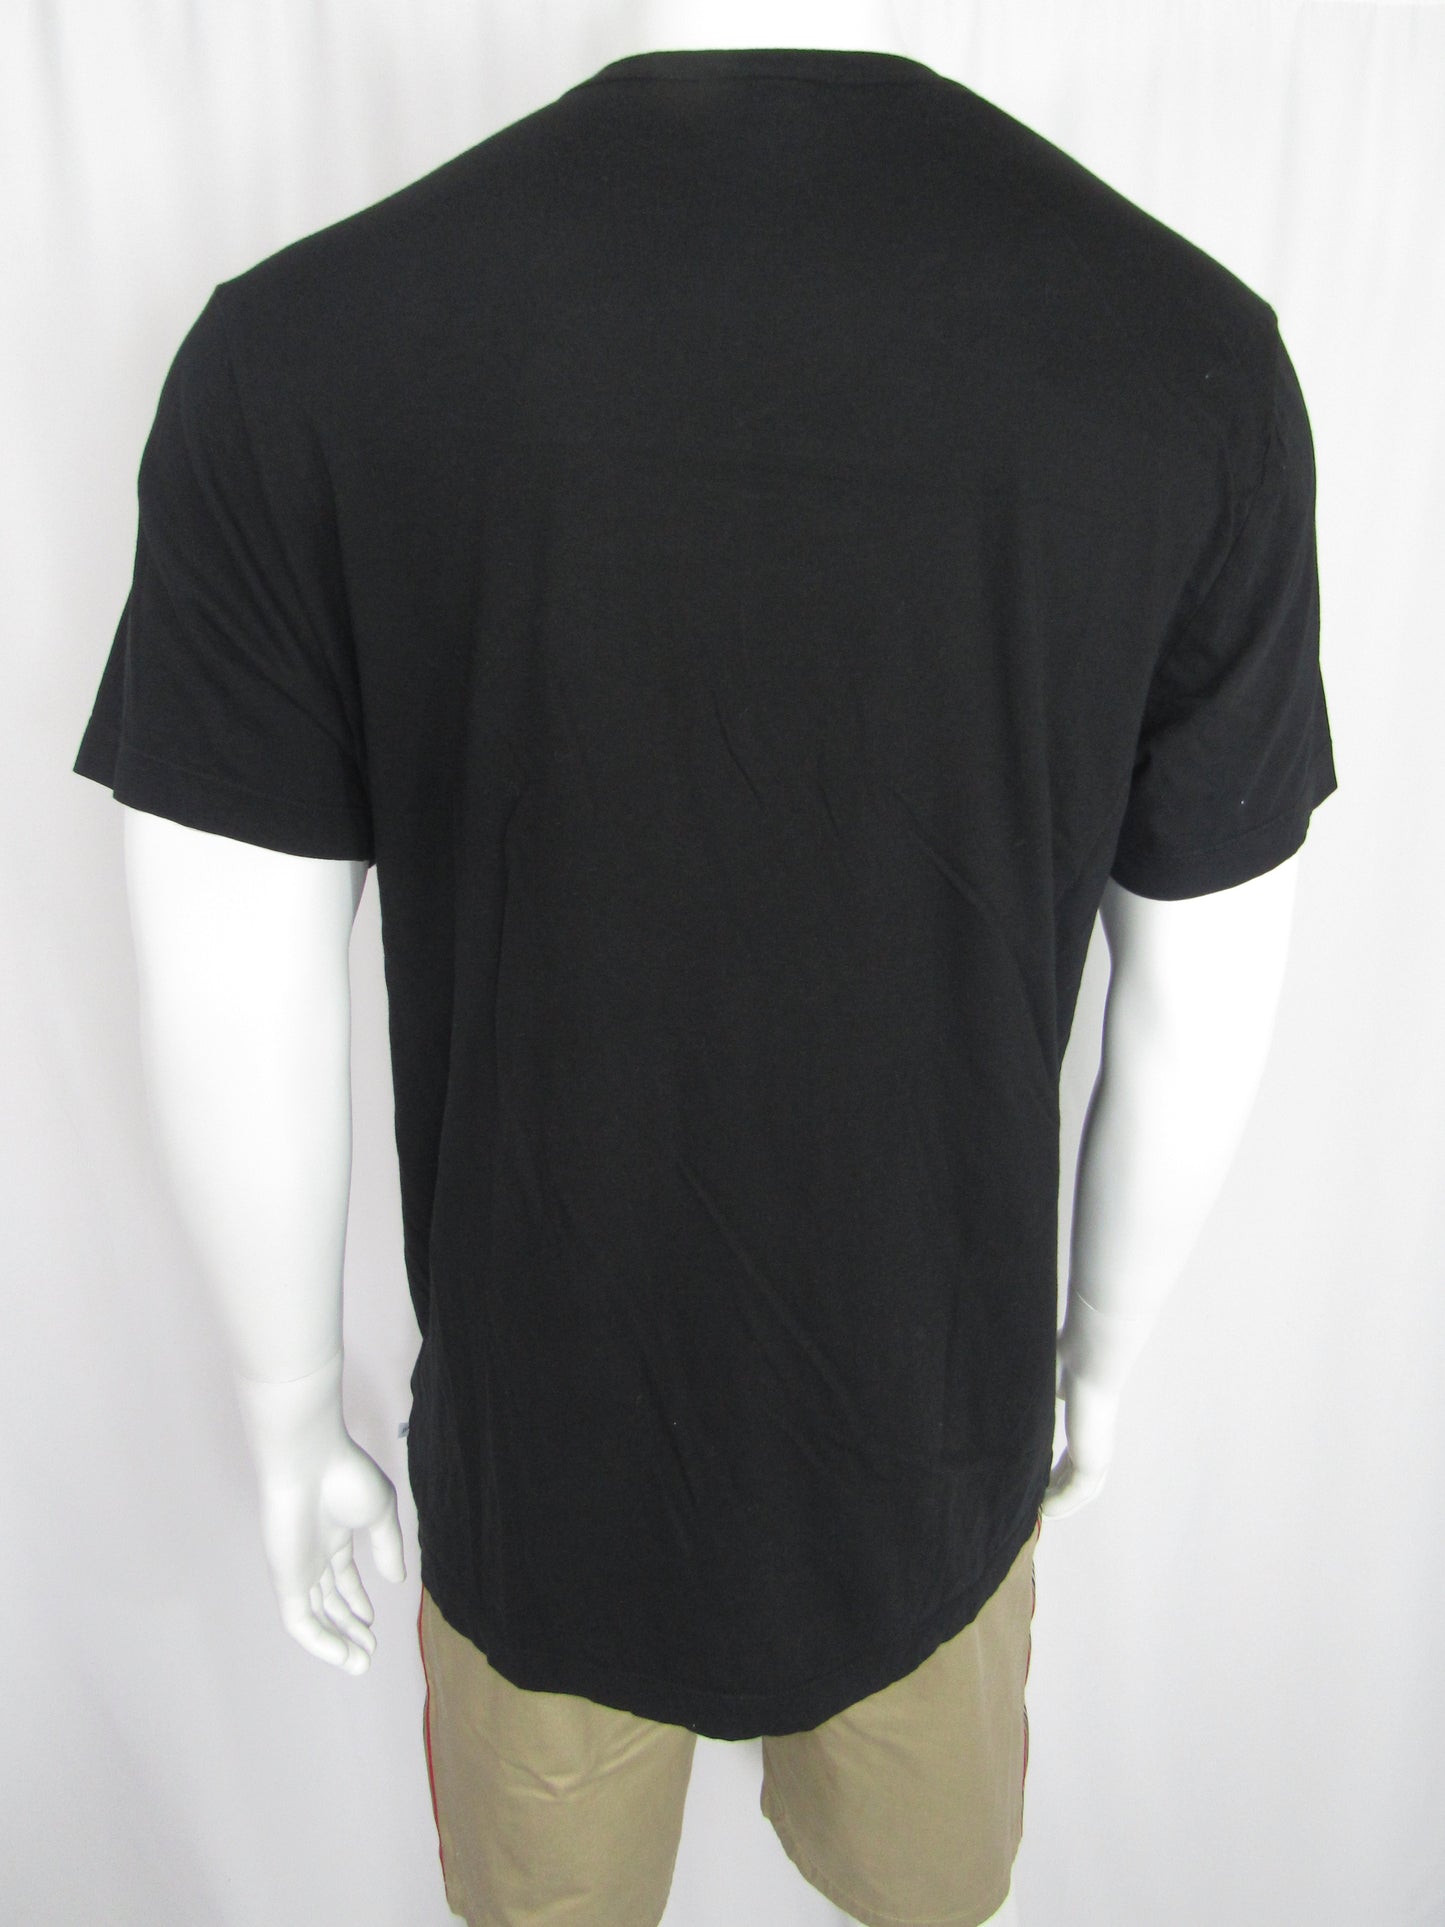 JAMES PERSE T-Shirt - Size 4/XL